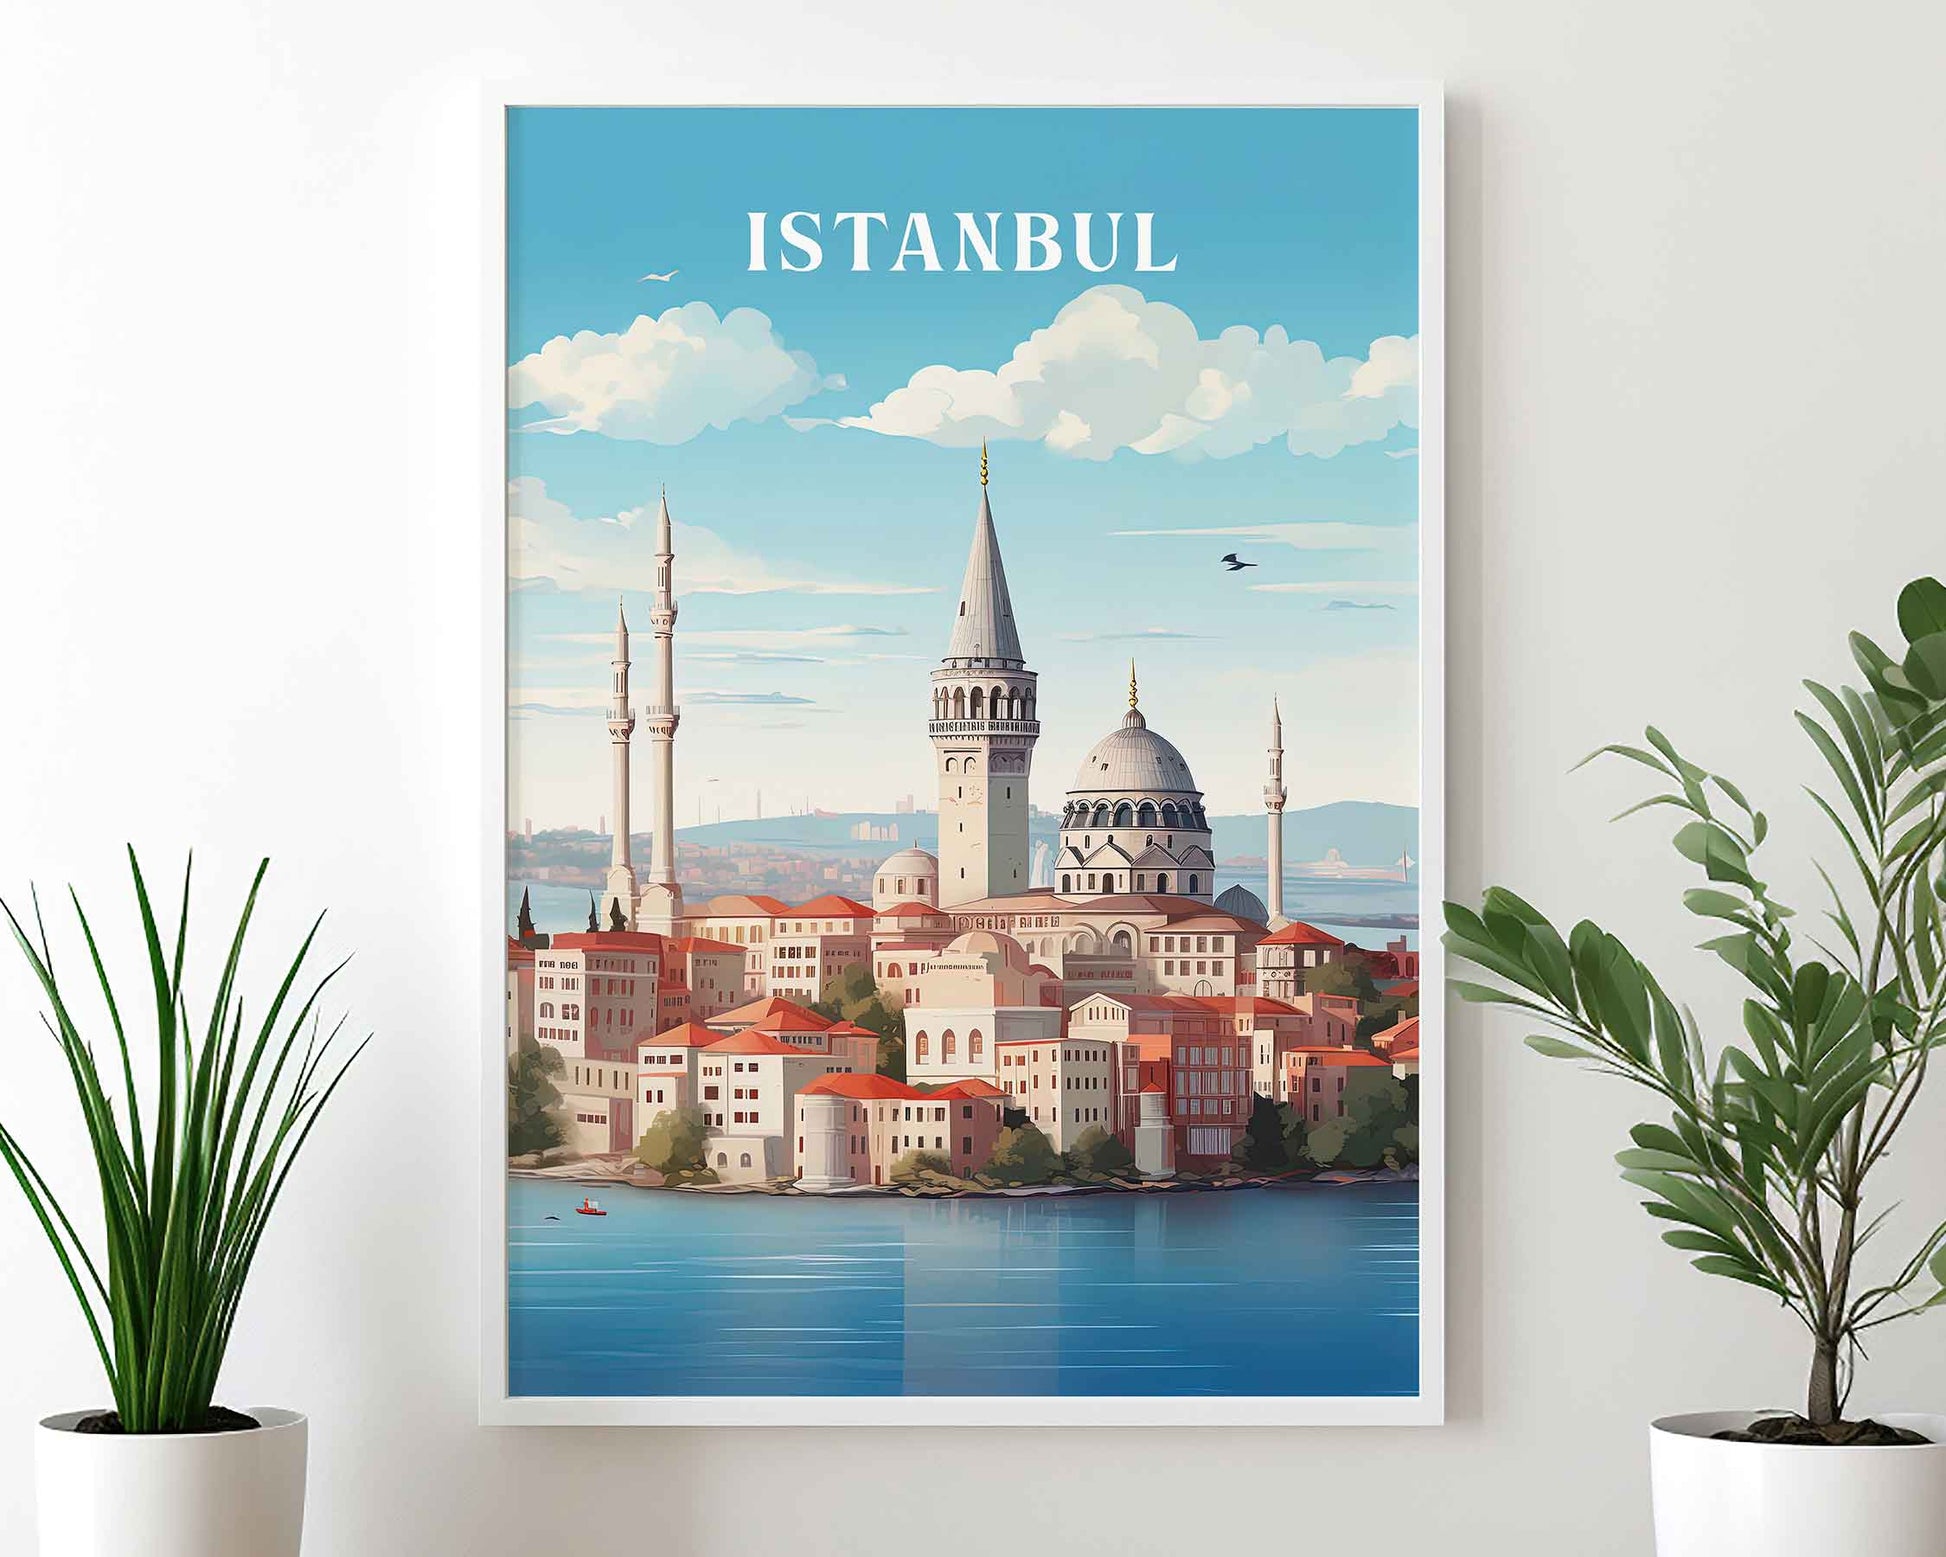 Framed Image of Istanbul Turkey Travel Poster Prints Wall Art Illustration